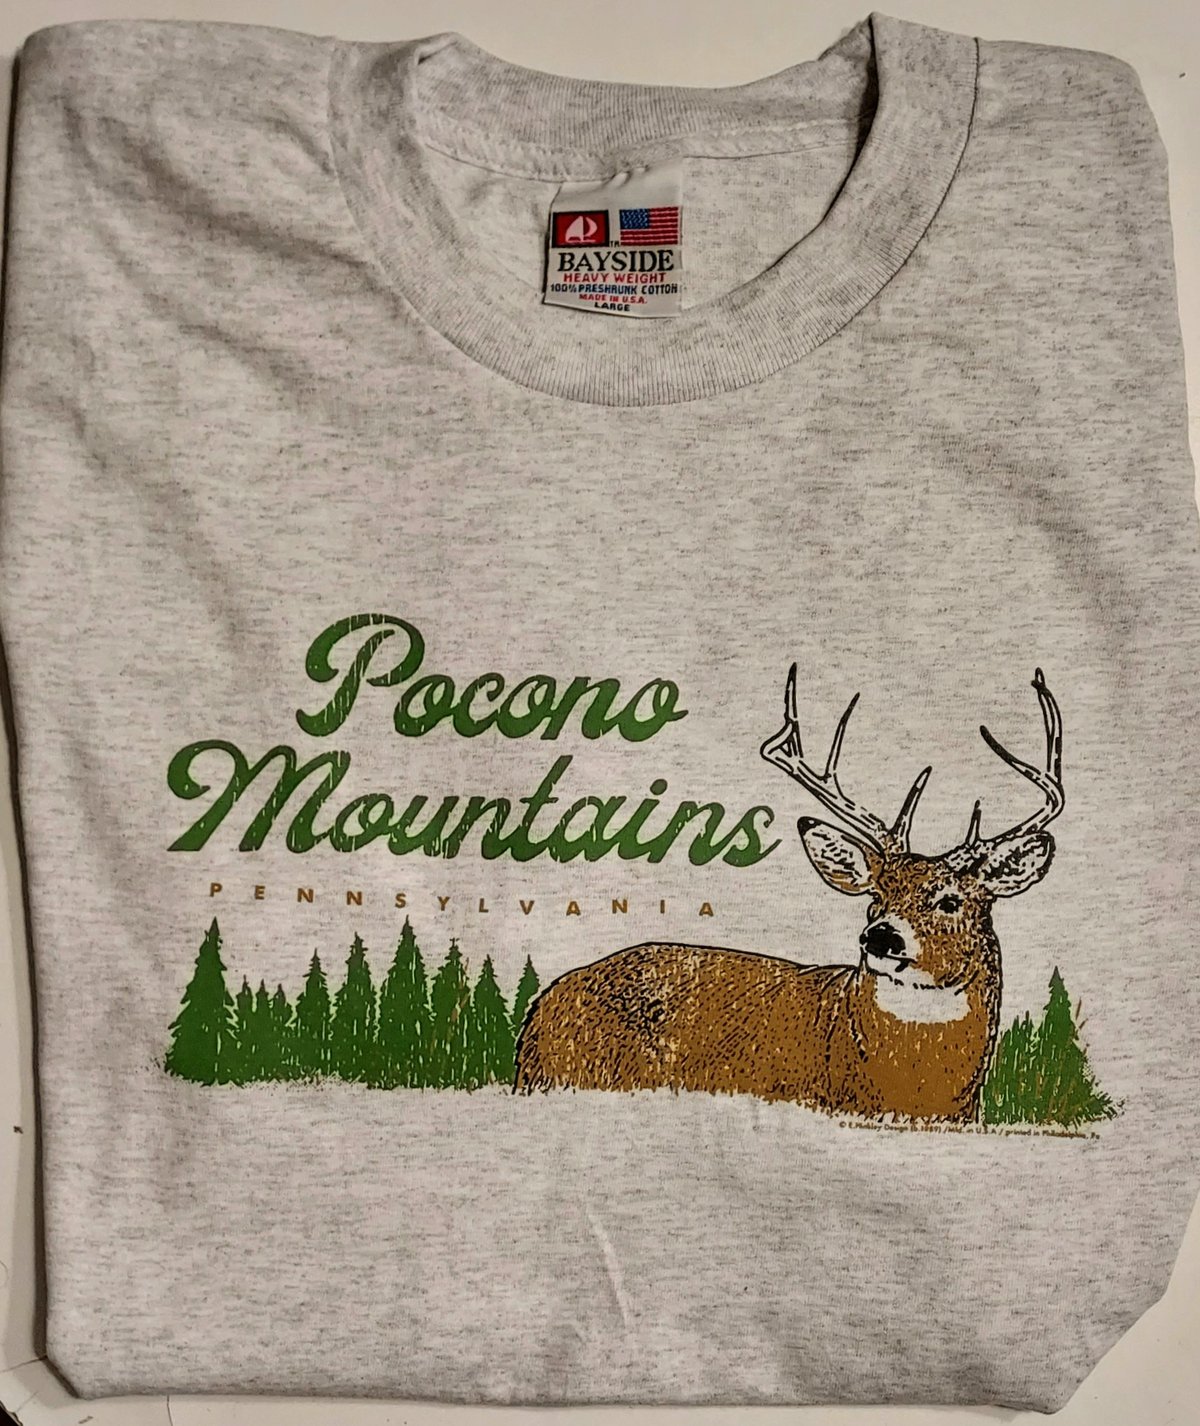 Image of Pocono Mountain Buck shirt